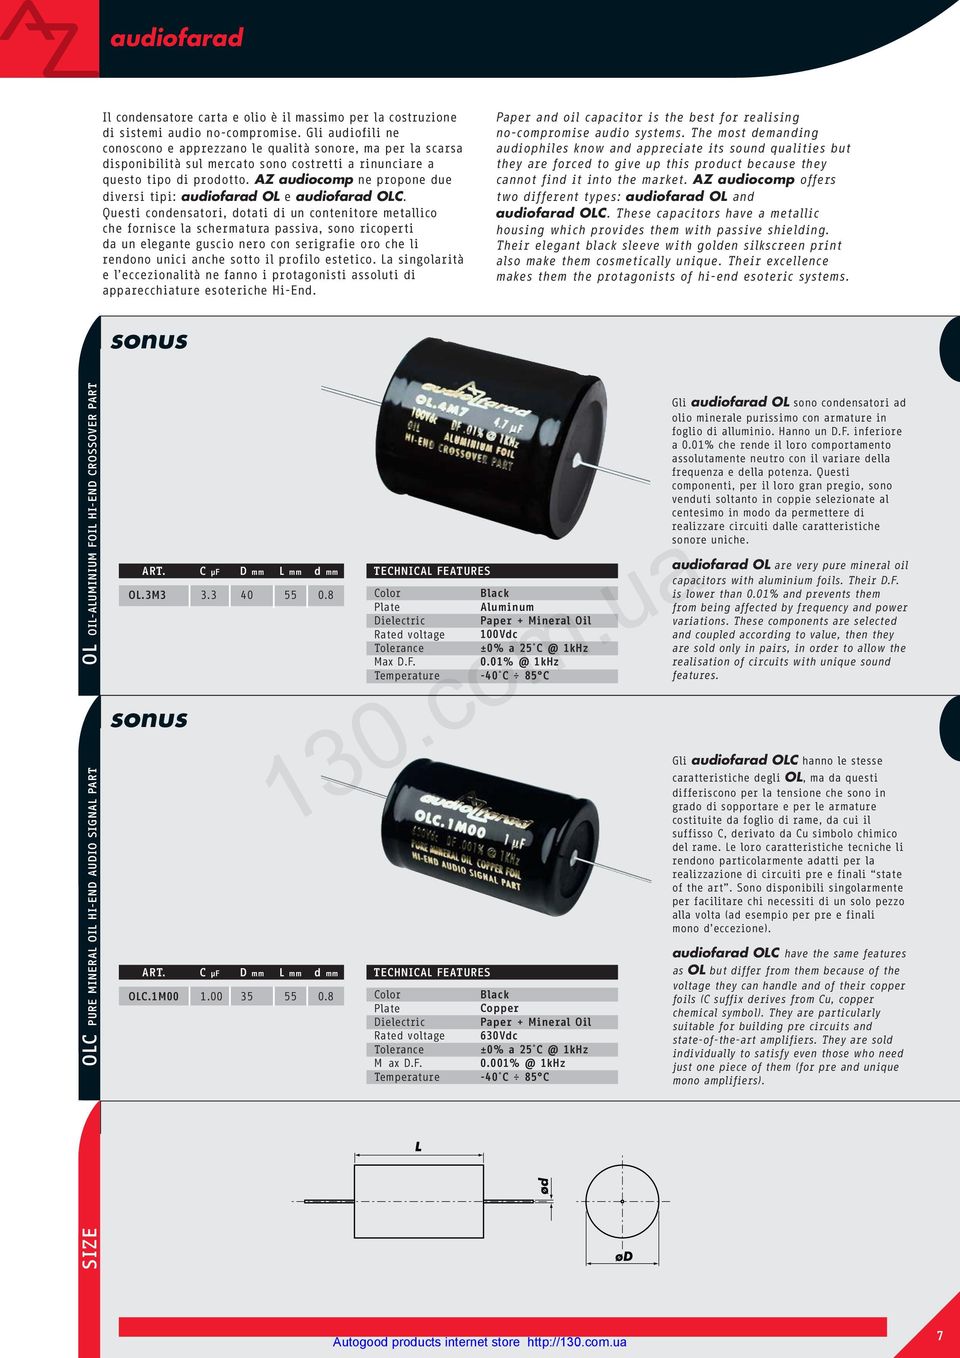 AZ audiocomp ne propone due diversi tipi: audiofarad OL e audiofarad OLC.